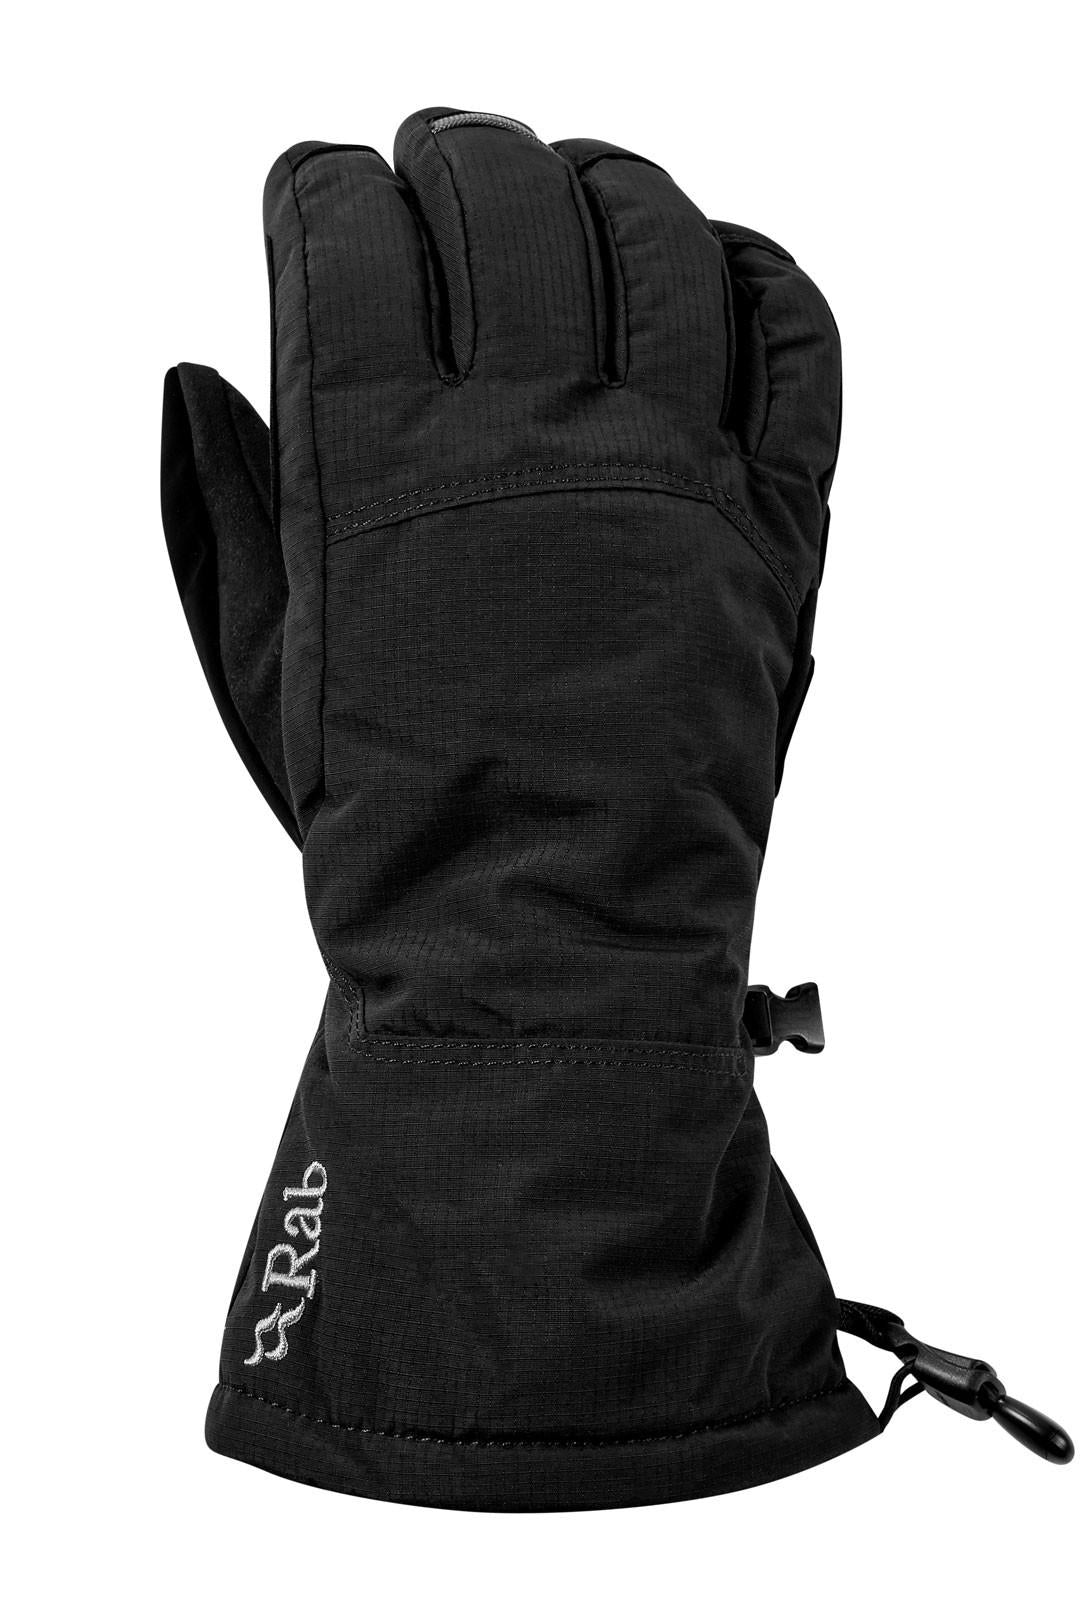 Rab Storm Glove Mens - Black